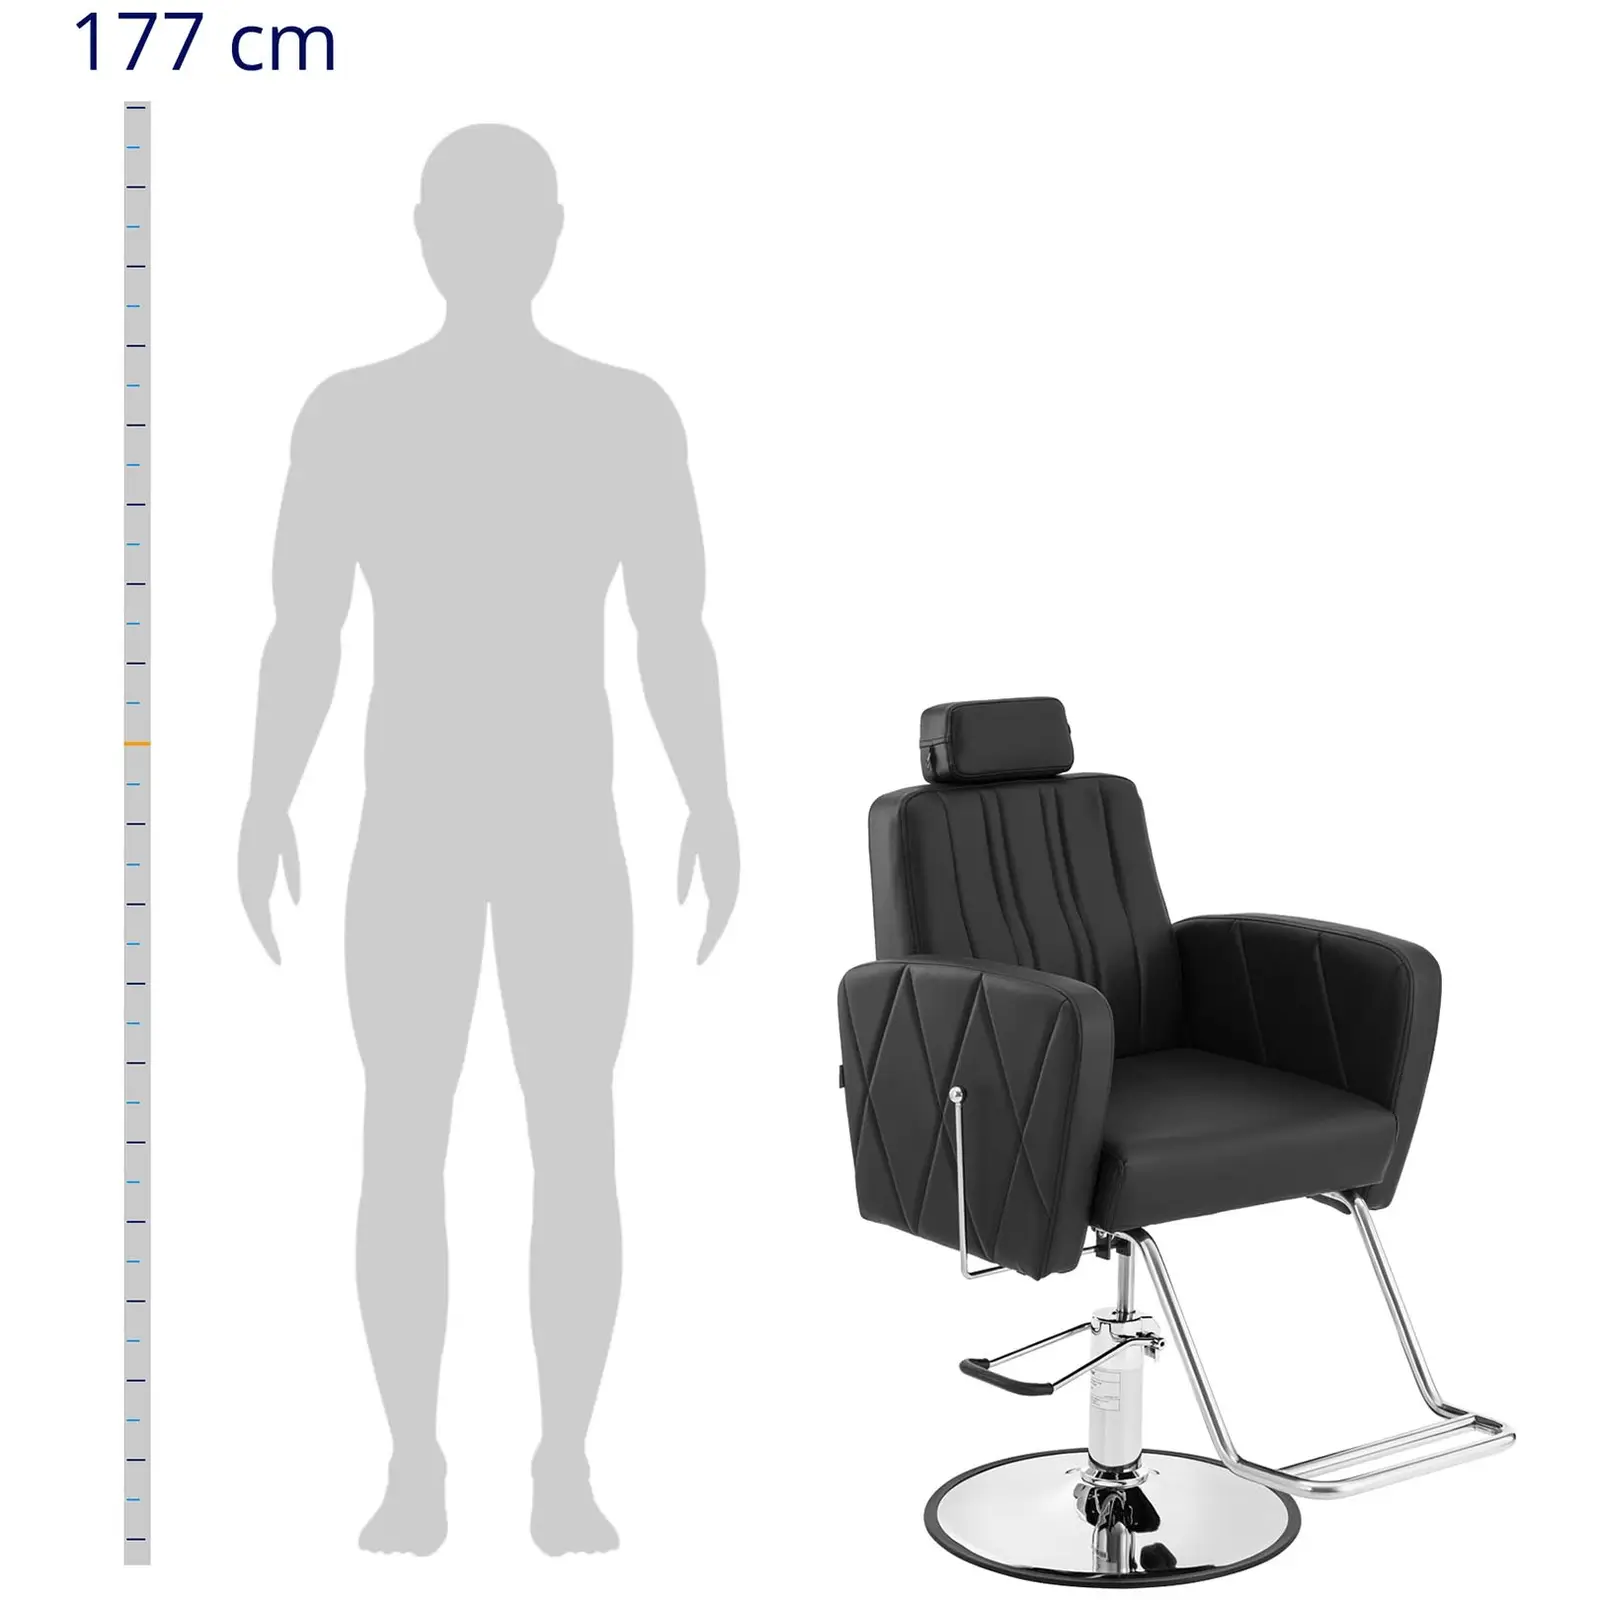 Salon Chair with footrest - 990 - 1140 mm - 200 kg - Dudley Black